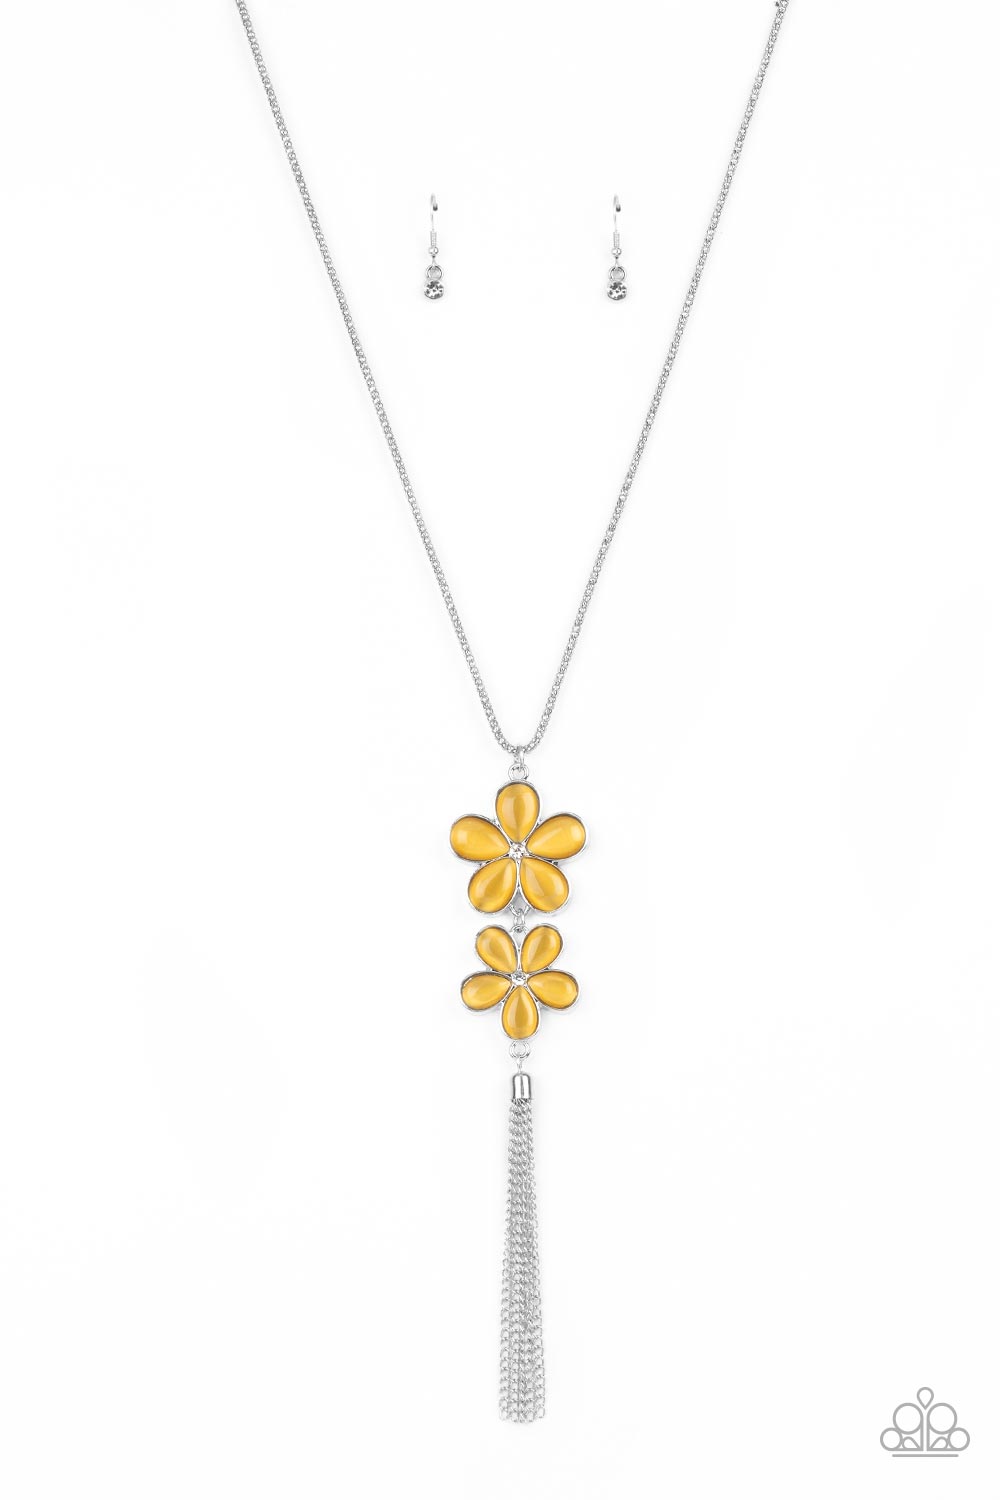 Perennial Powerhouse Yellow Cat&#39;s Eye Stone Flower Necklace - Paparazzi Accessories- lightbox - CarasShop.com - $5 Jewelry by Cara Jewels